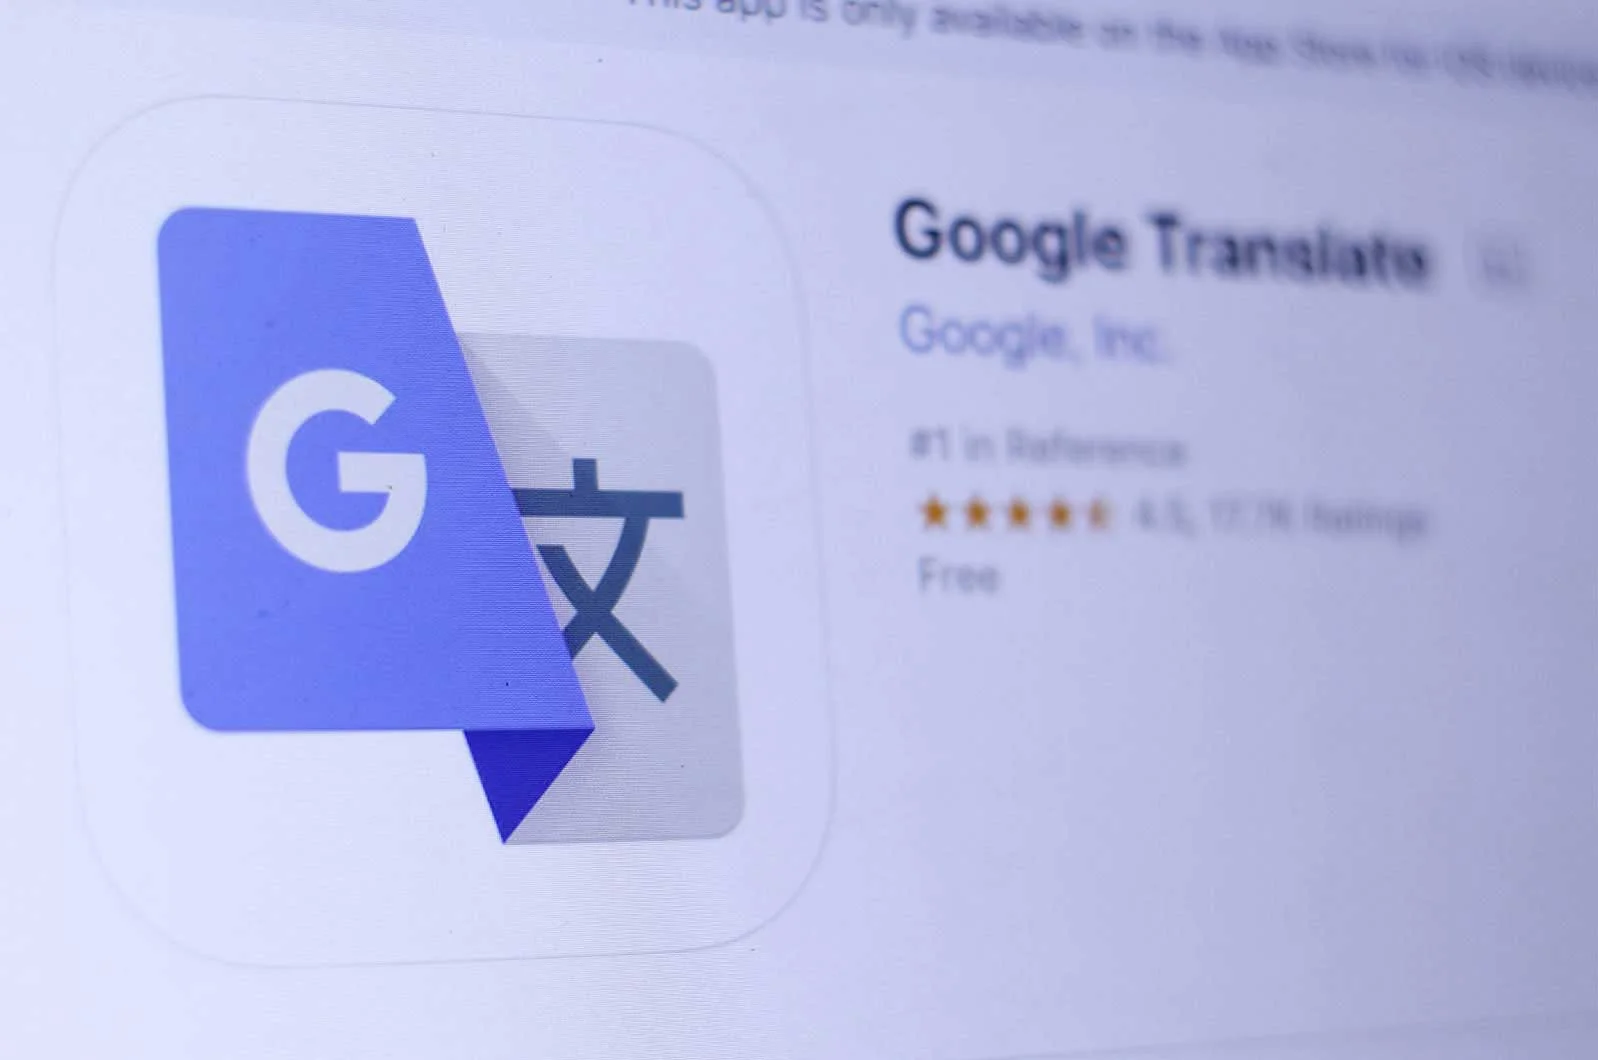 Google Translate app icon. Concept of online translation tools and professional translators.